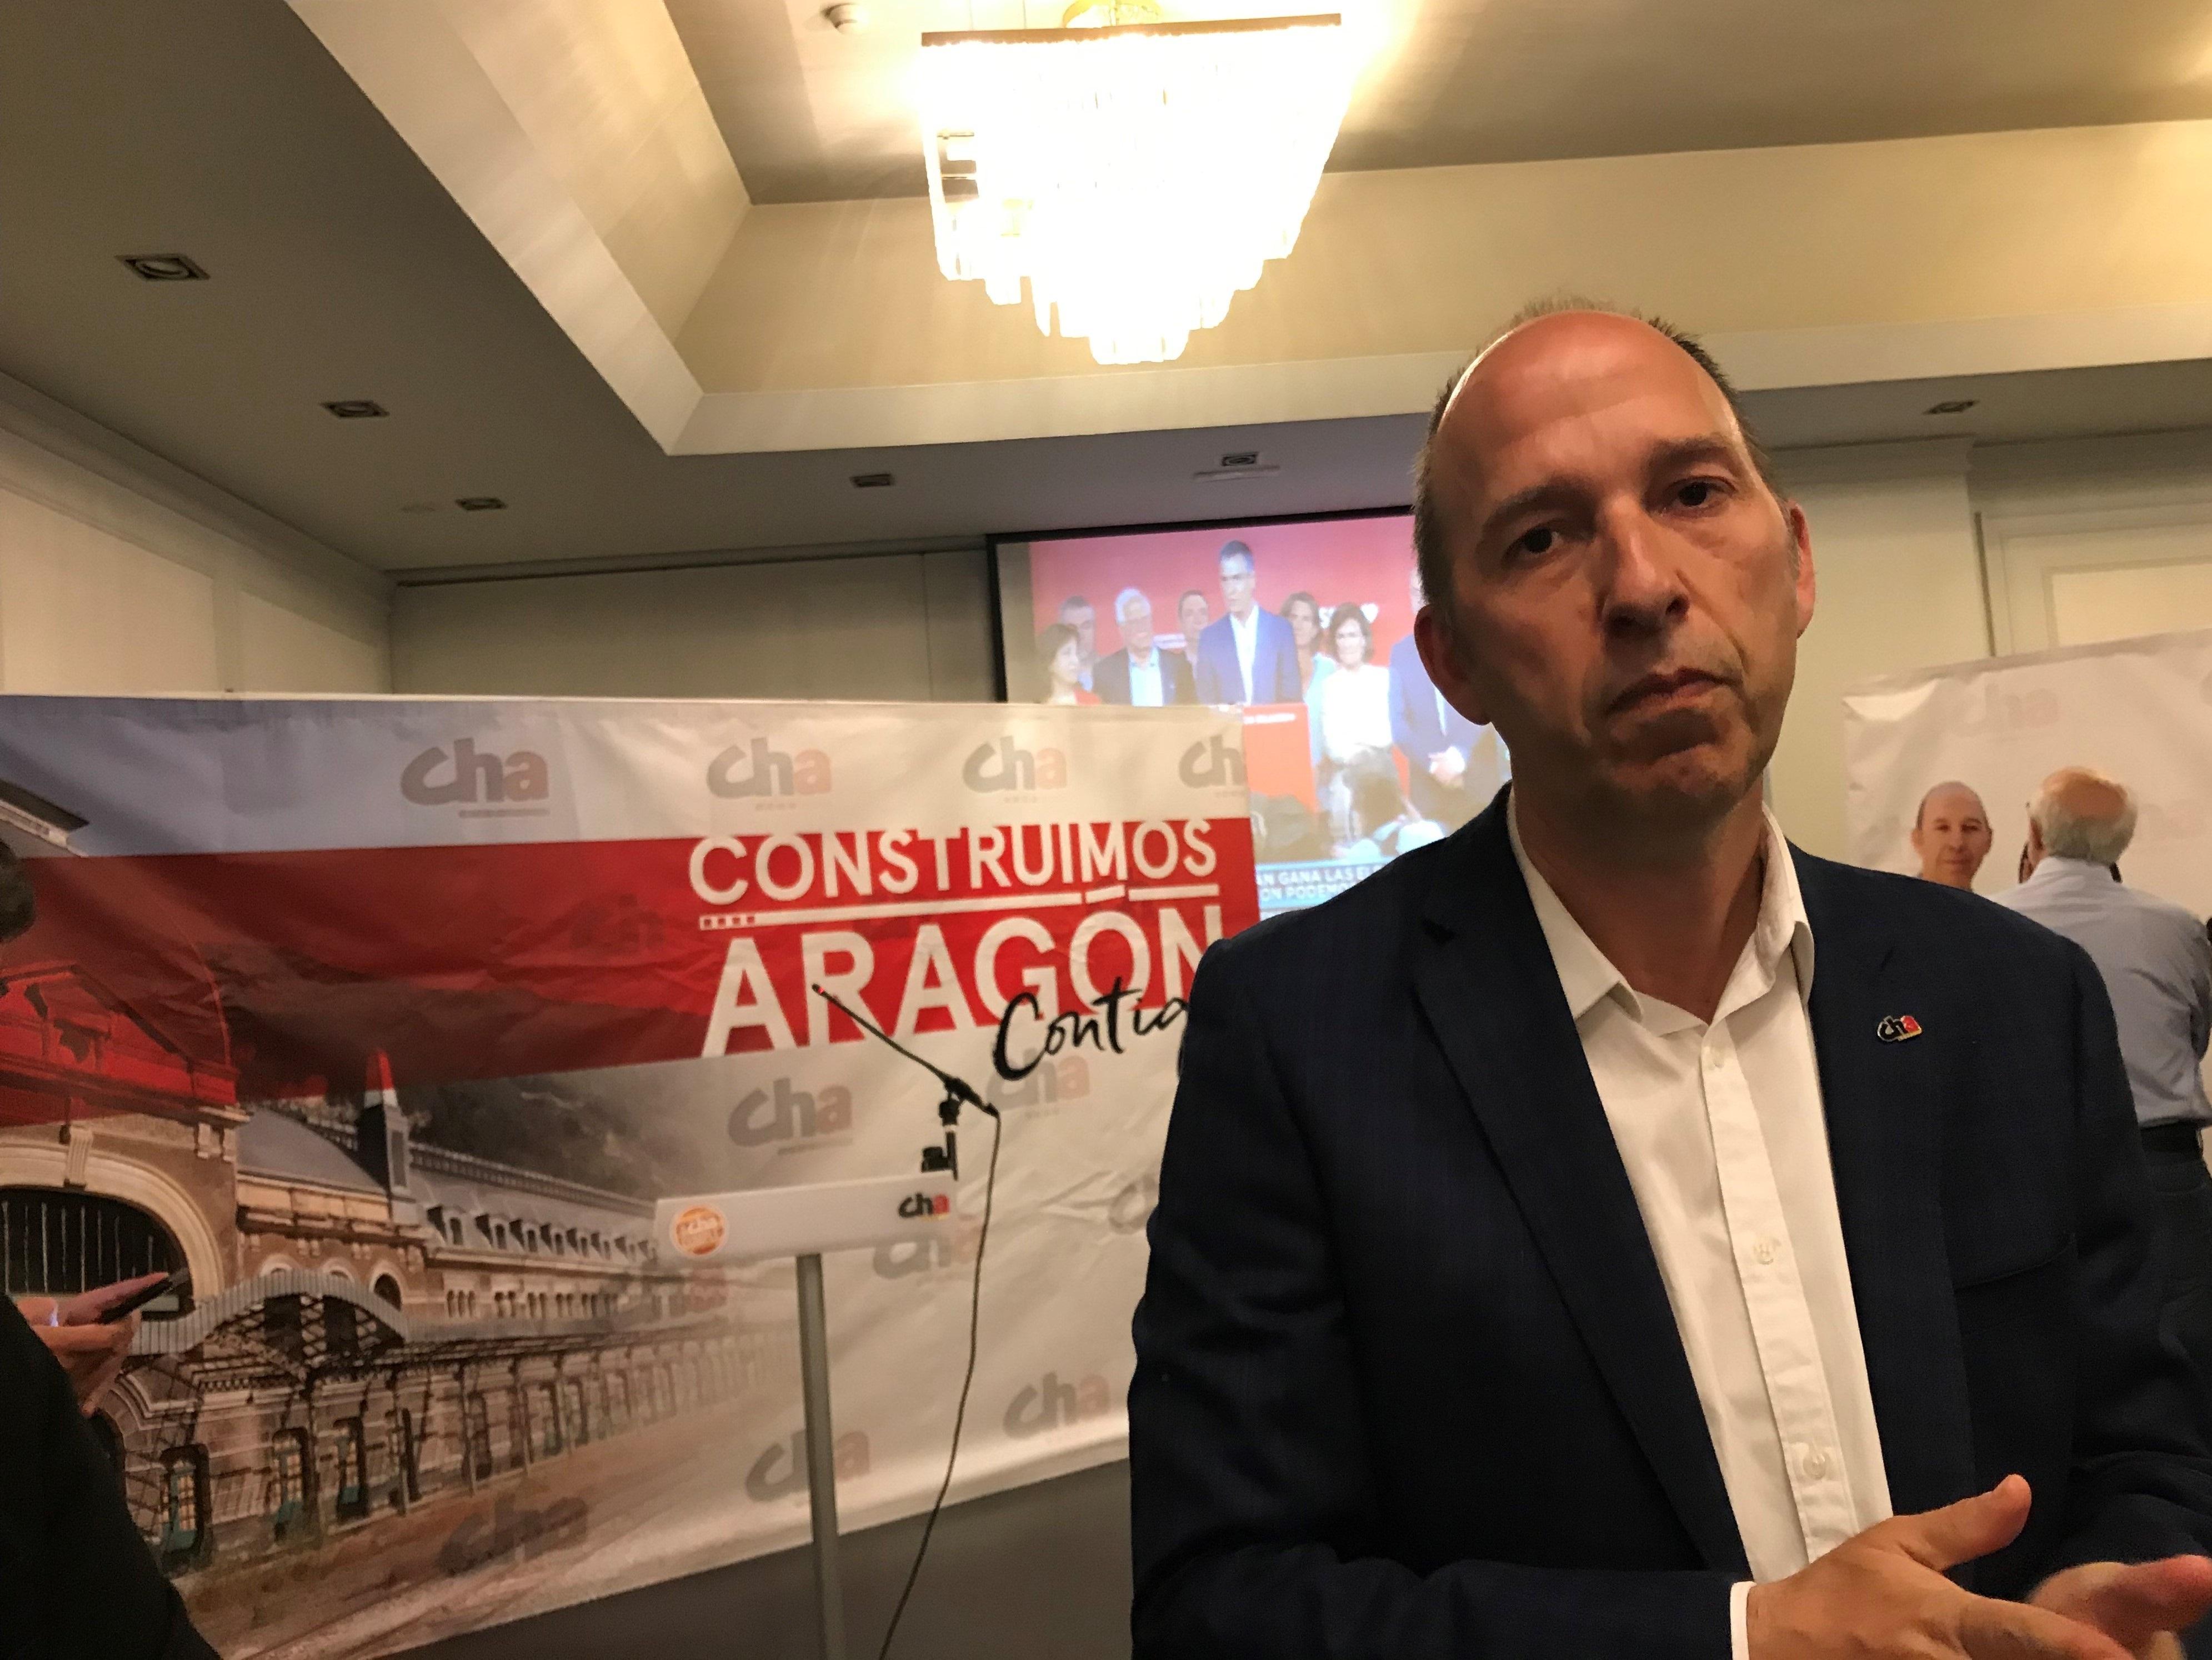 El candidato de CHA a la Alcaldía de Zaragoza Carmelo Asensio